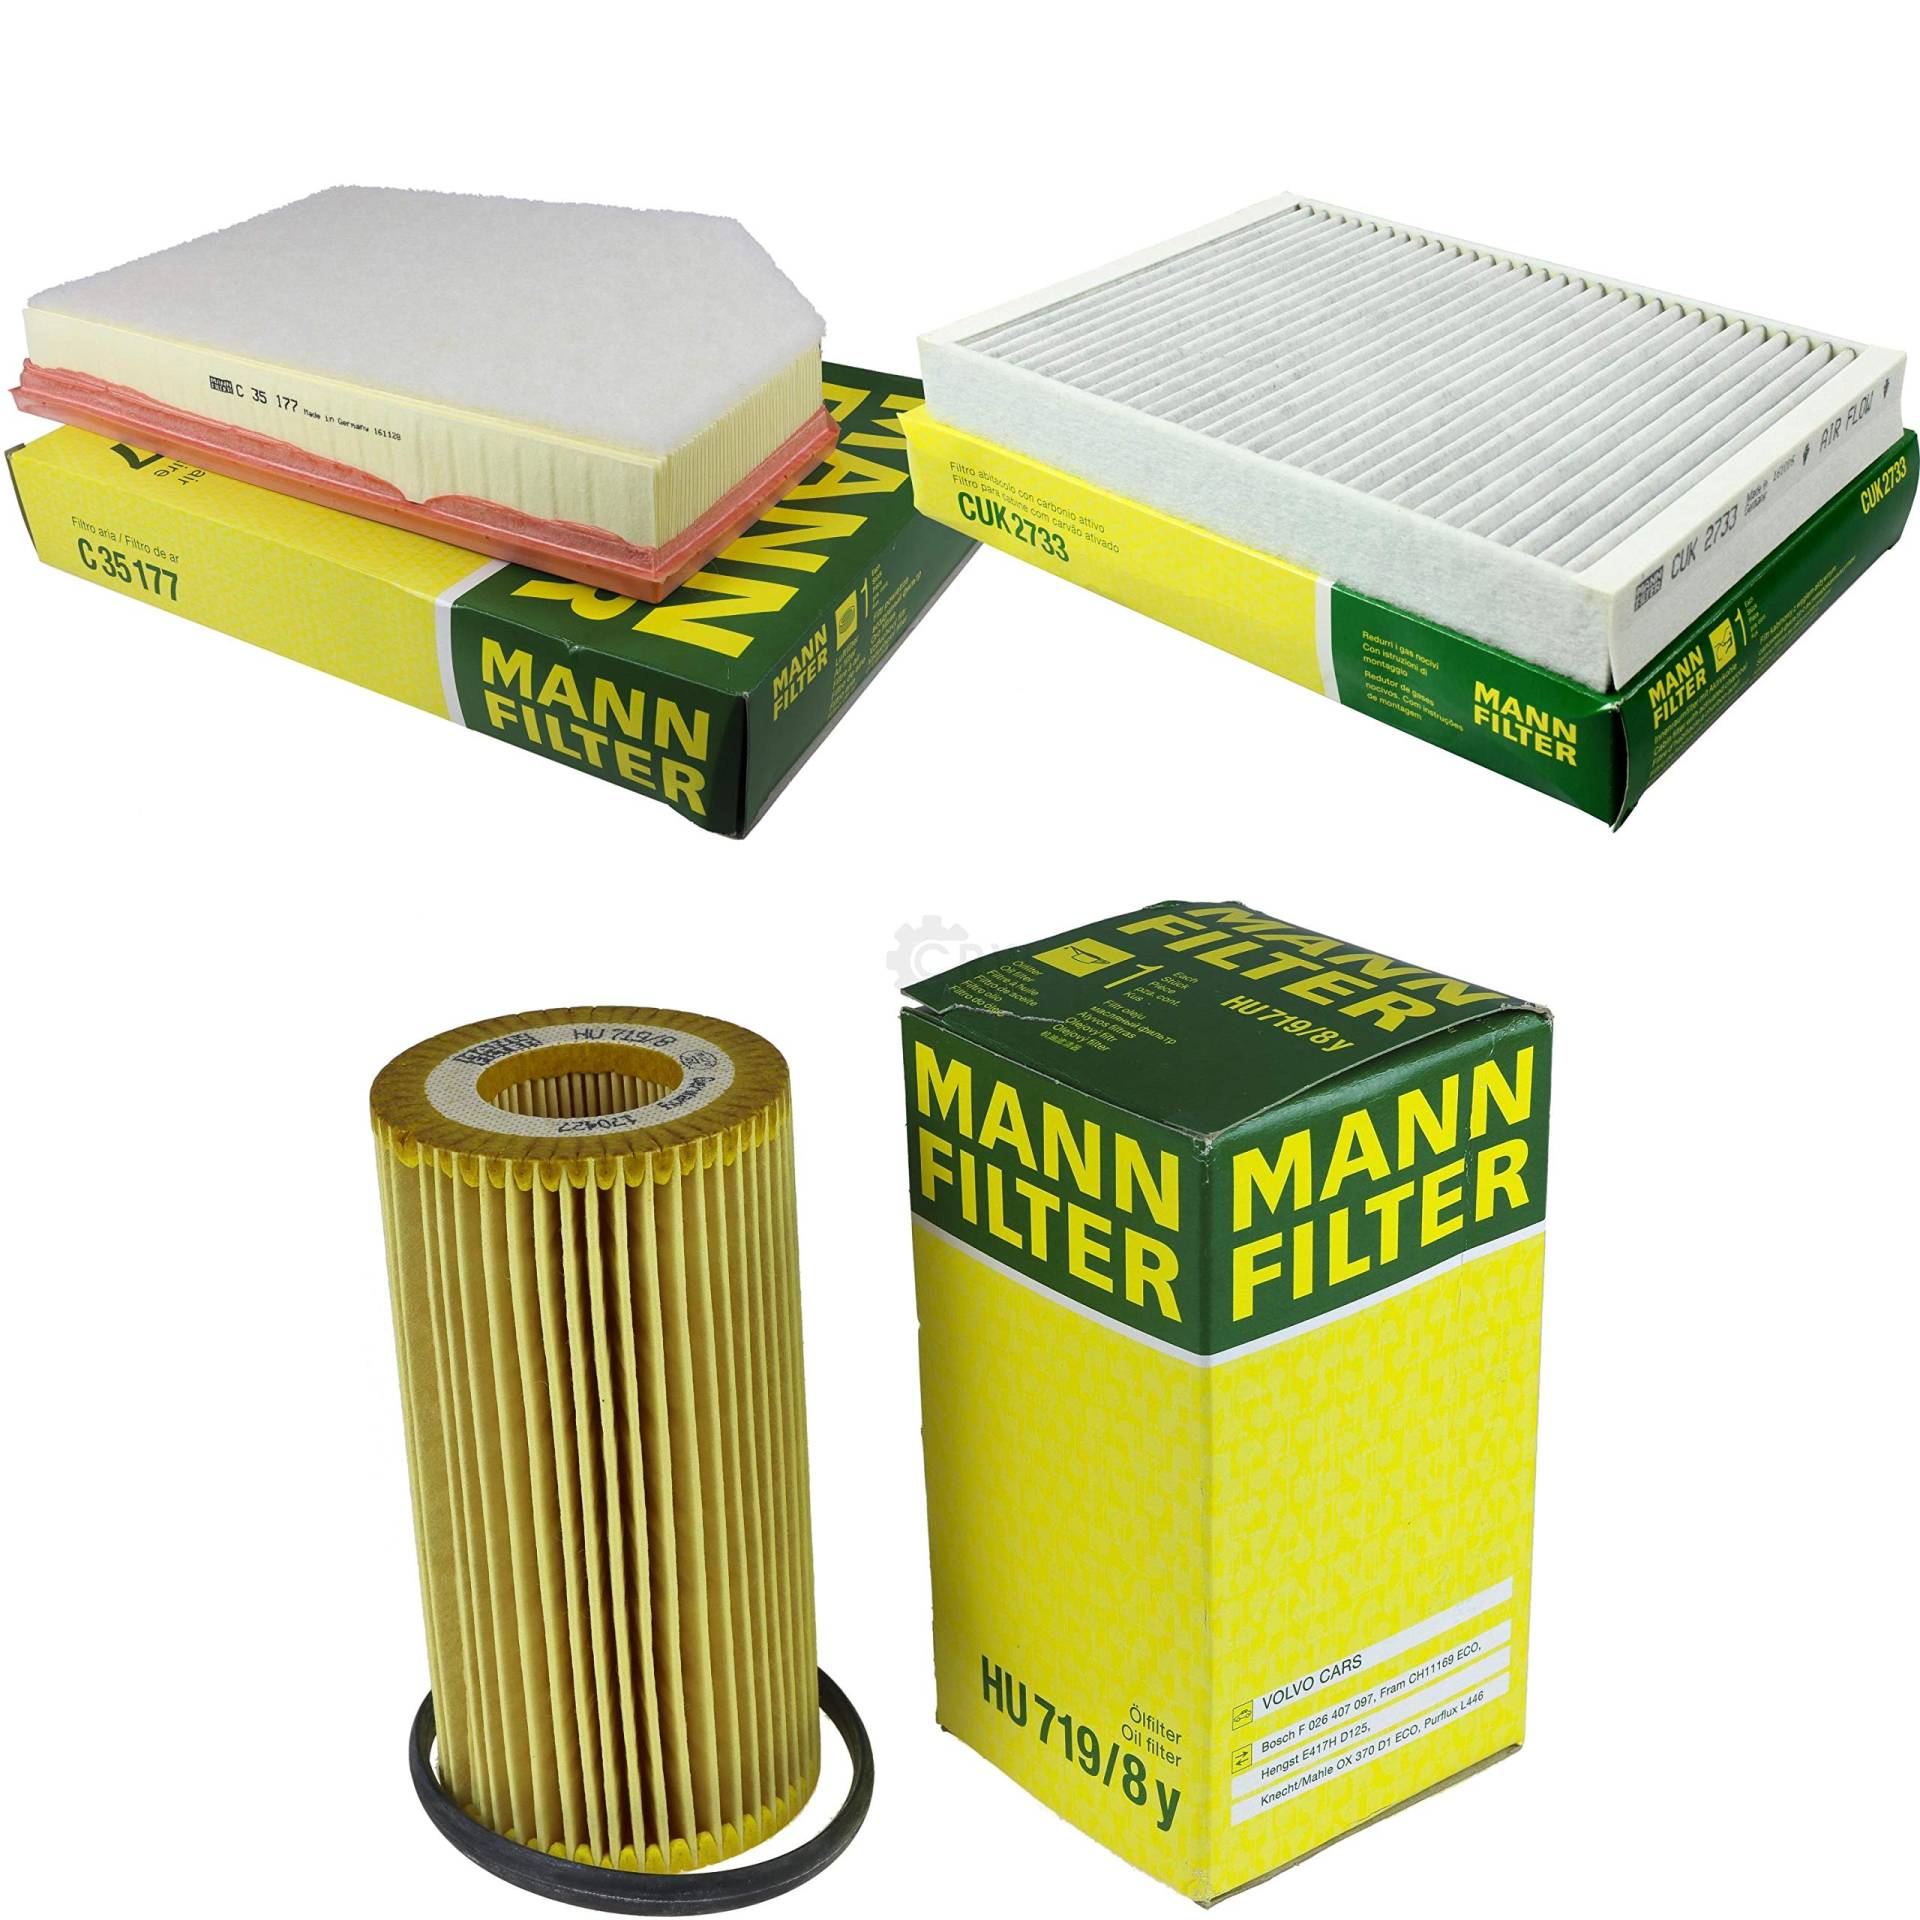 MANN-FILTER Inspektions Set Inspektionspaket Luftfilter Ölfilter Innenraumfilter von Diederichs